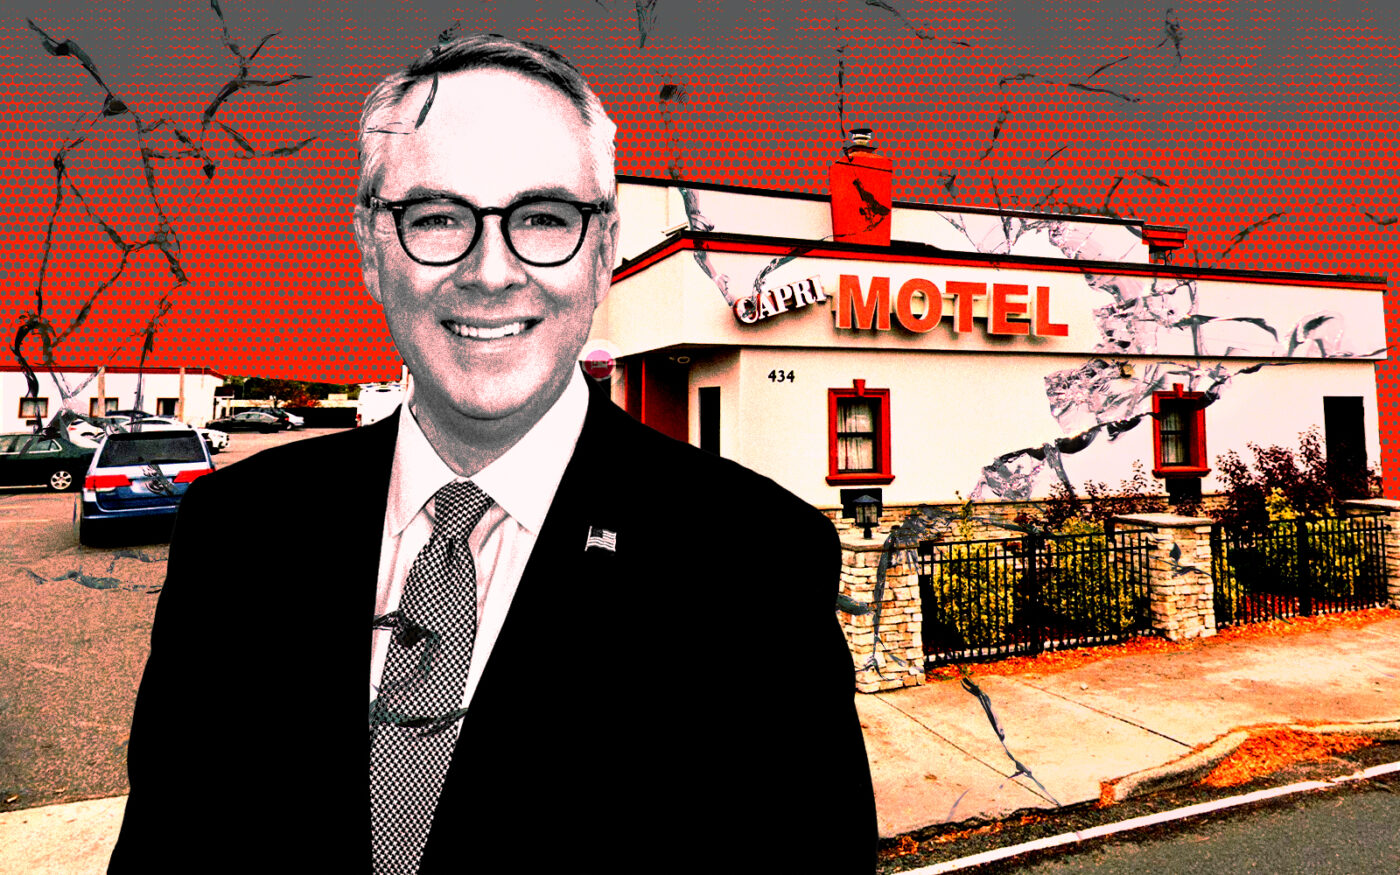 Hempstead Pursuing Eminent Domain to Seize Motel